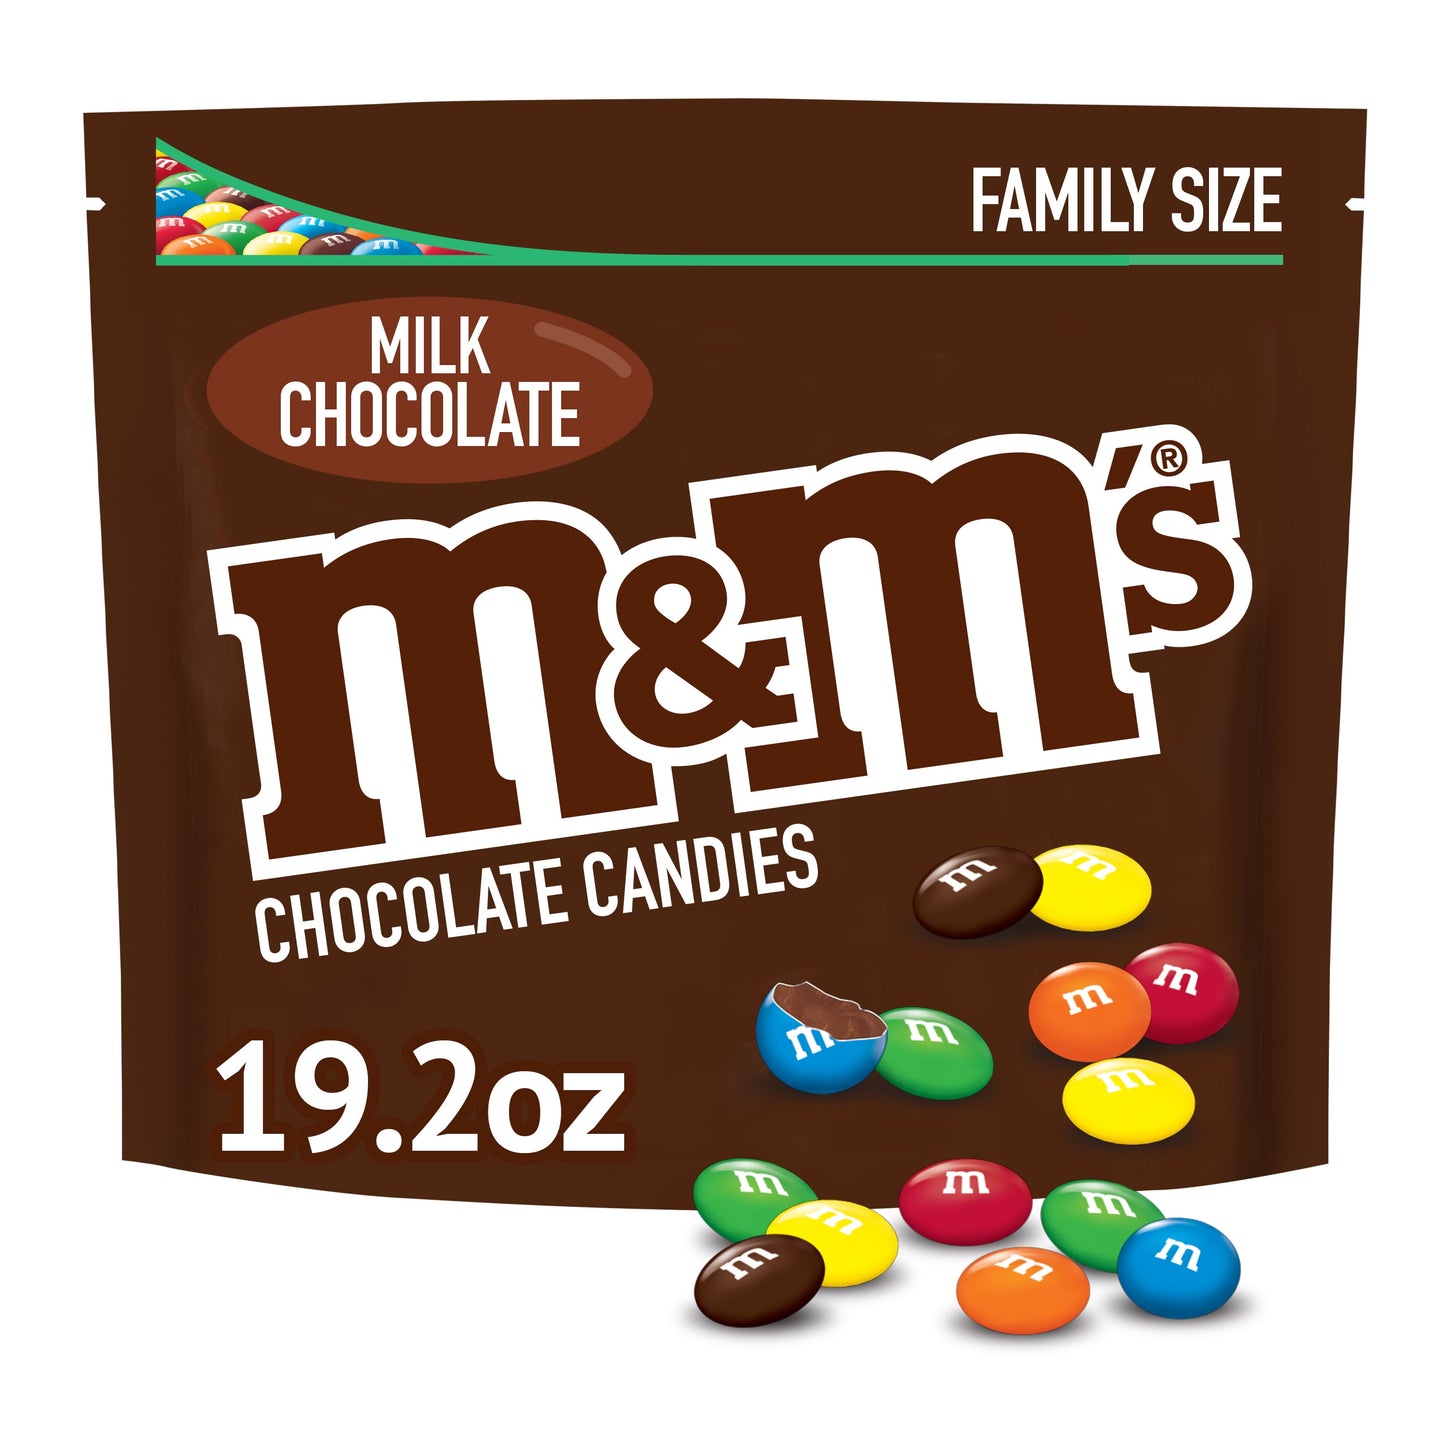 Milk Chocolate Candy Family Size - 19.2 Oz Bag